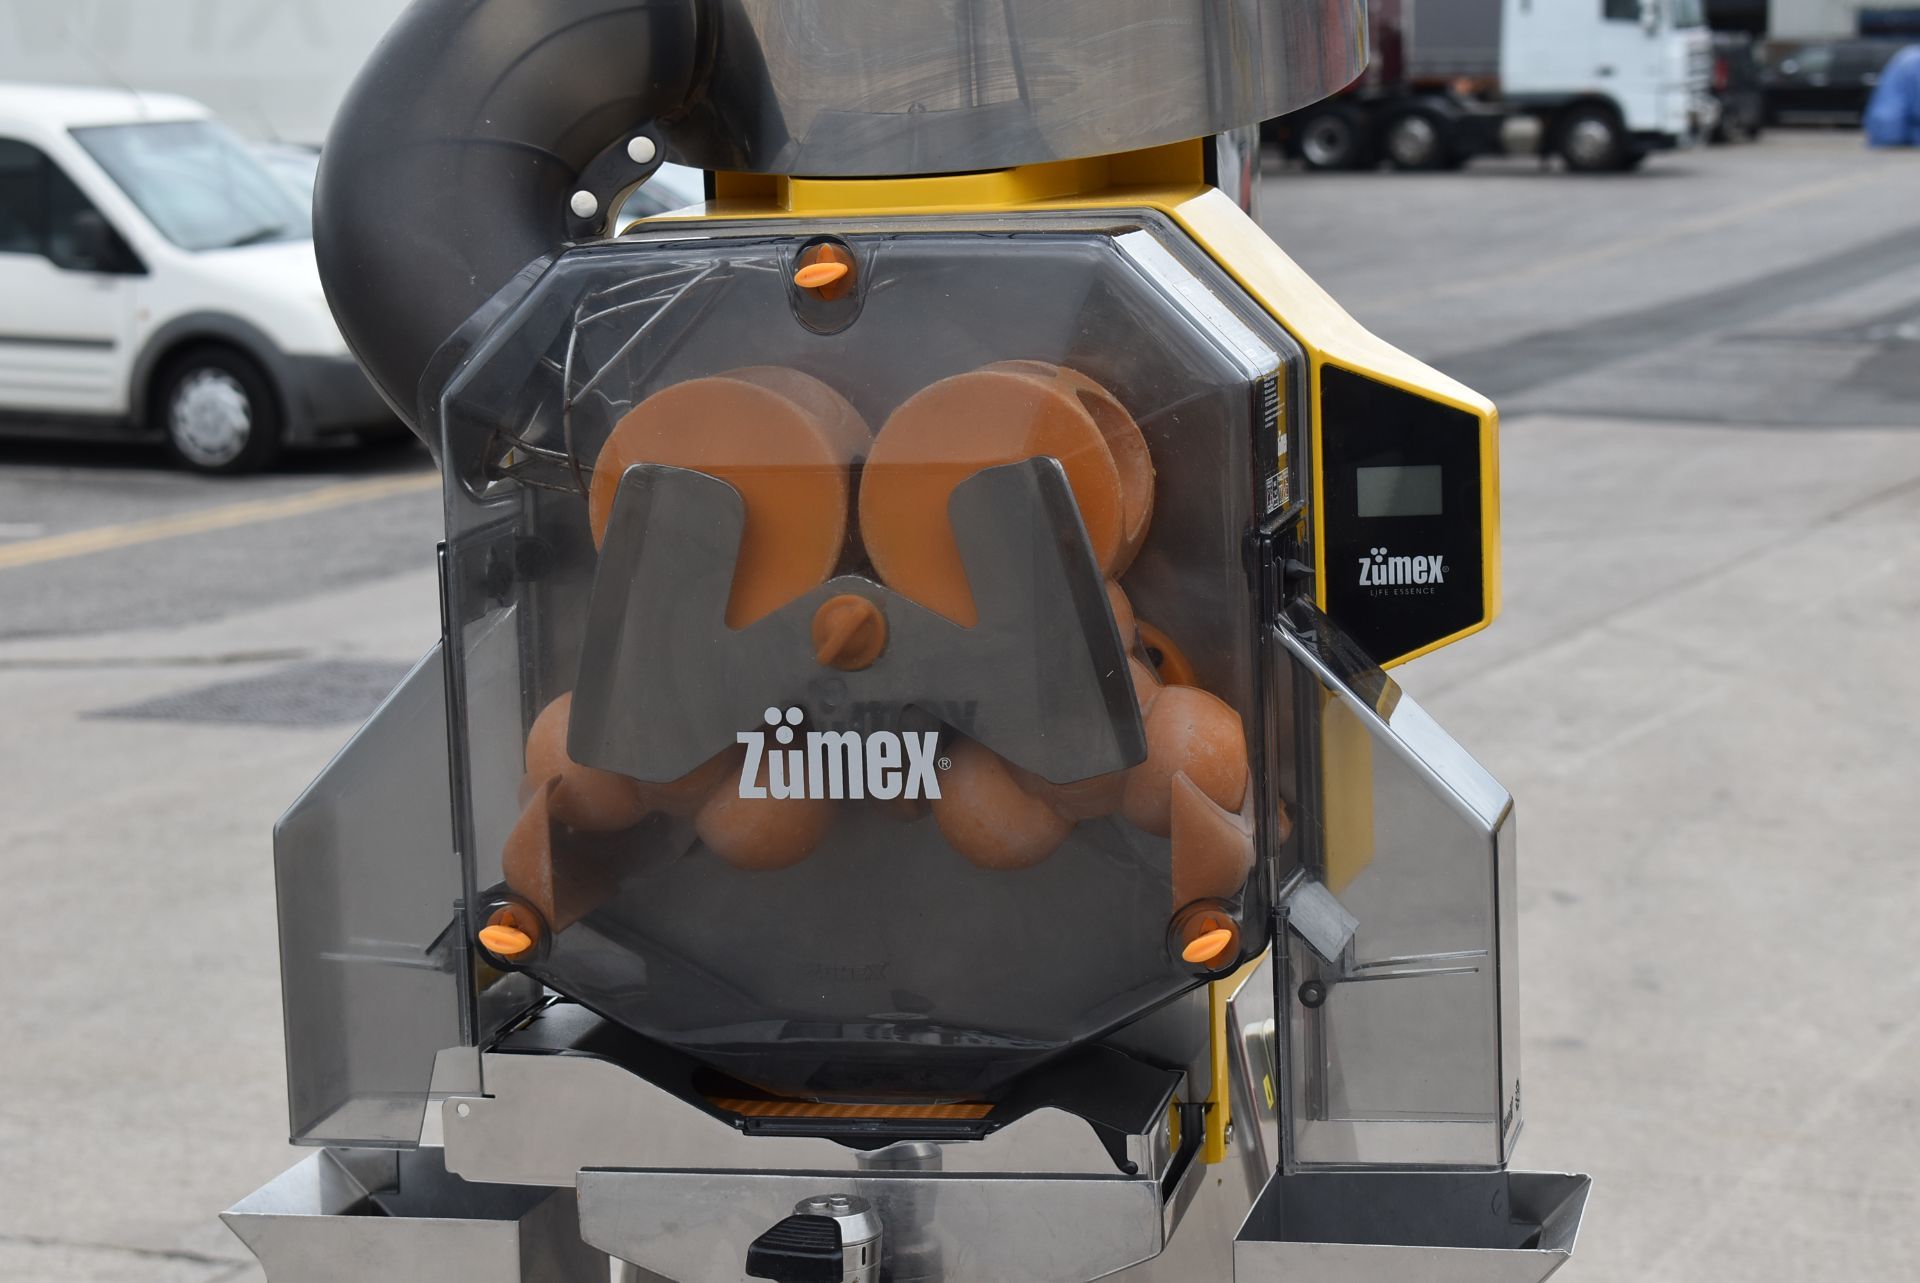 1 x Zumex Speed S +Plus Self-Service Podium Commercial Citrus Juicer - Manufactured in 2018 - - Image 4 of 6